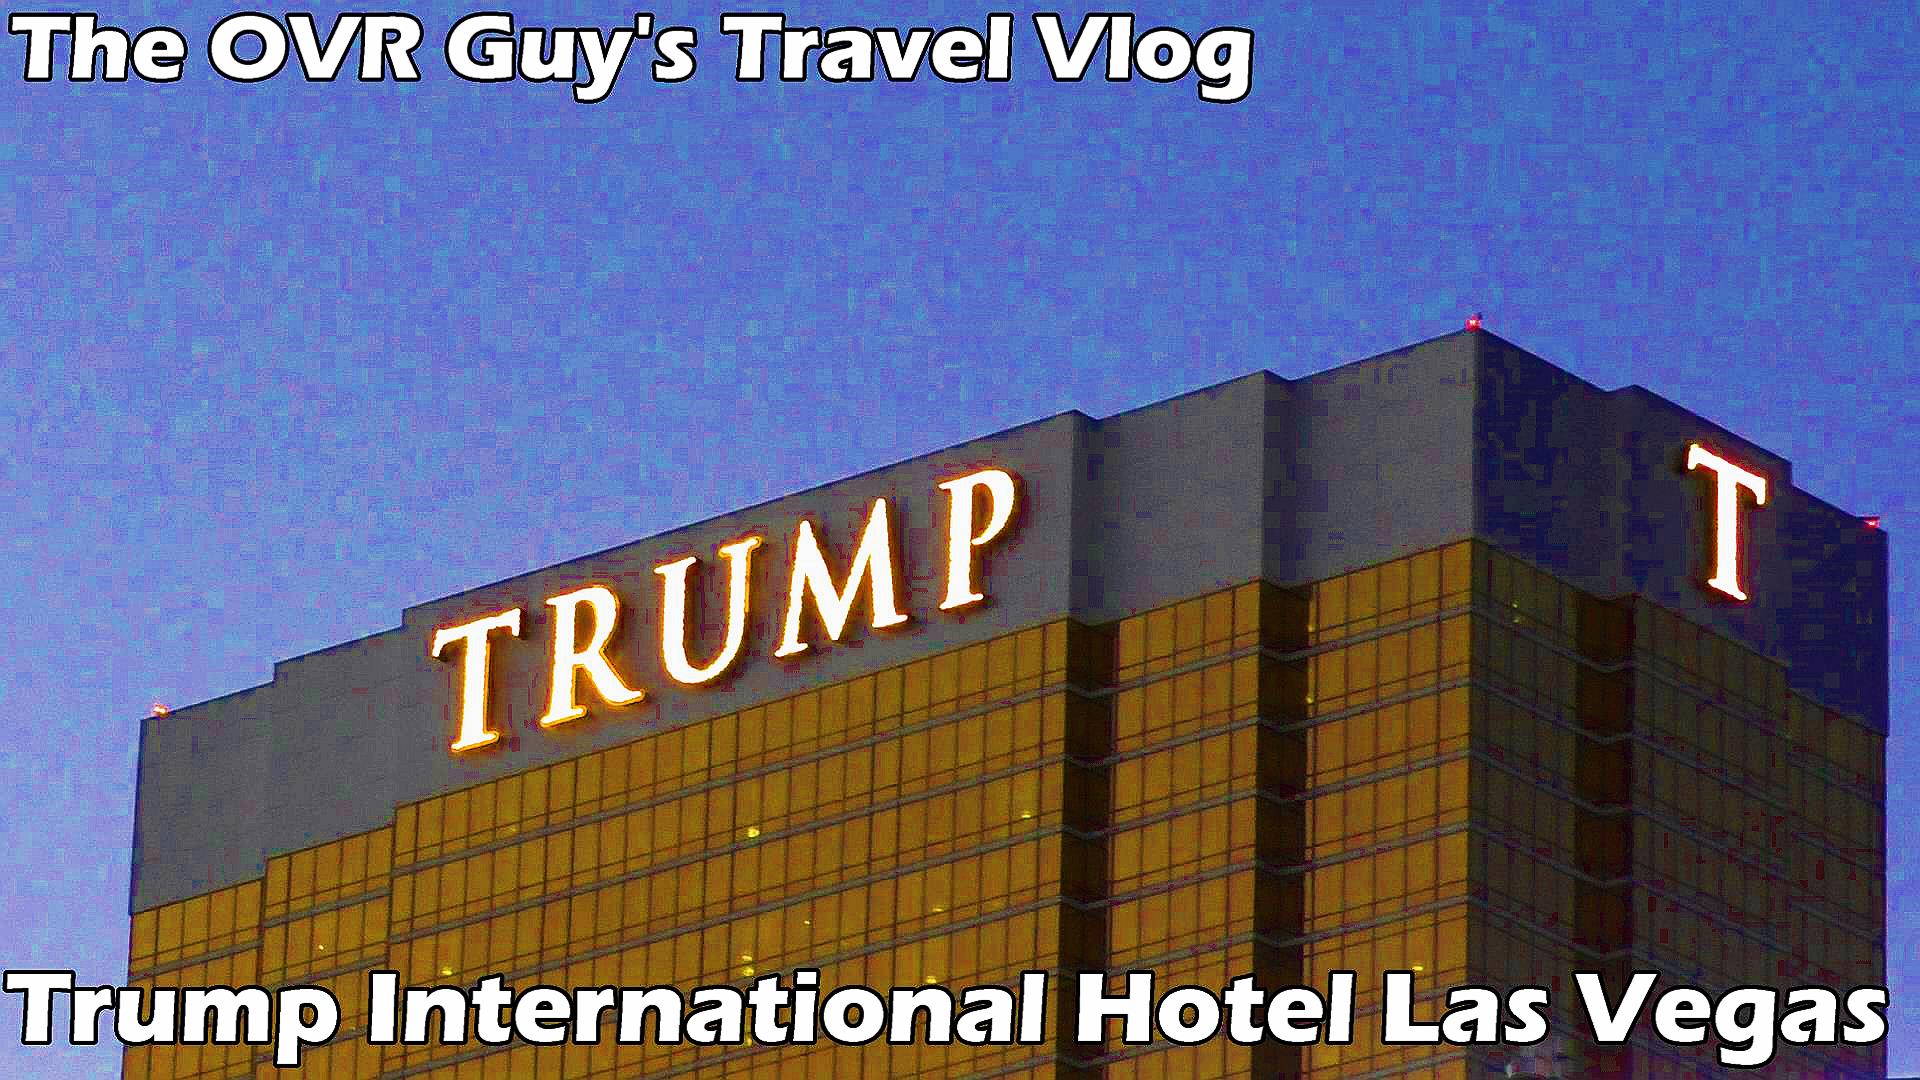 Trump International Hotel Las Vegas Review